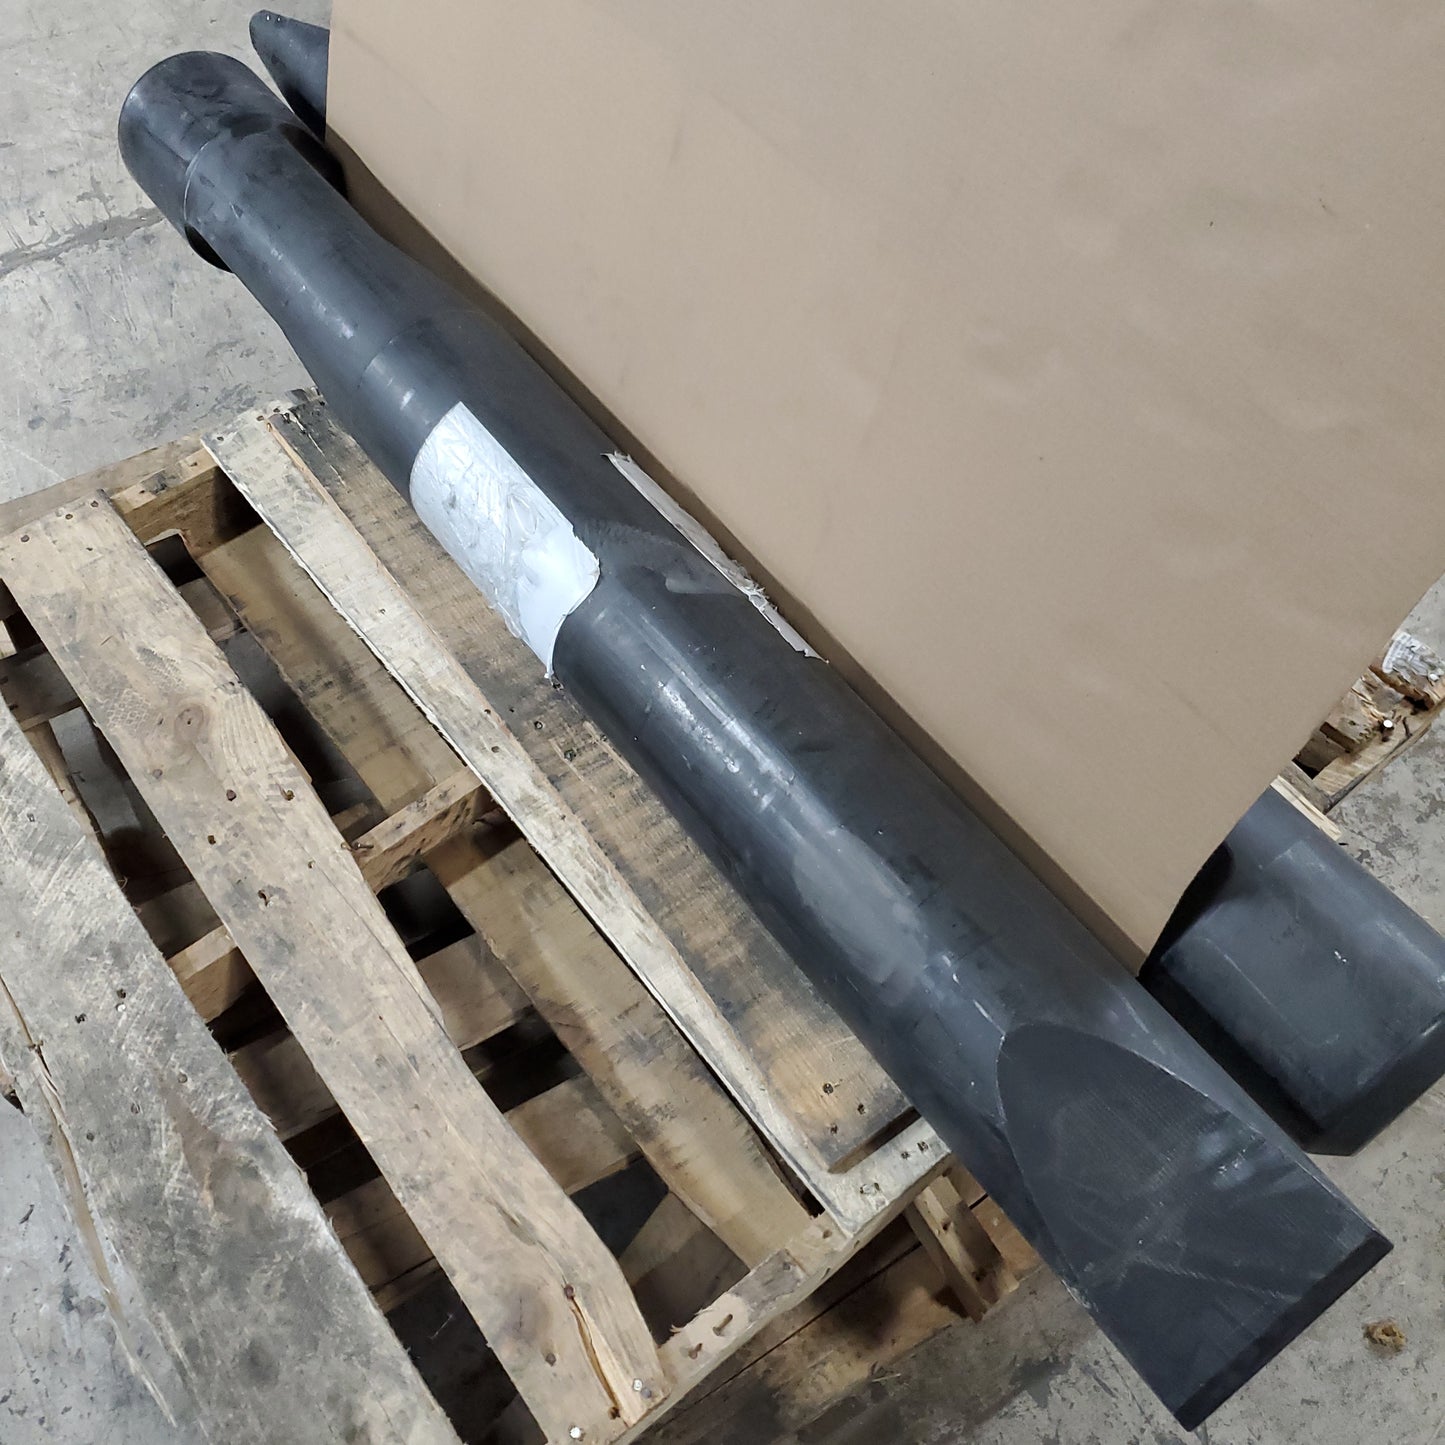 Hydraulic Excavator Hammer Breaker Bit / H-Wedge Chisel Tip 7 In. Dia. X 63 In. HM2200 (New)